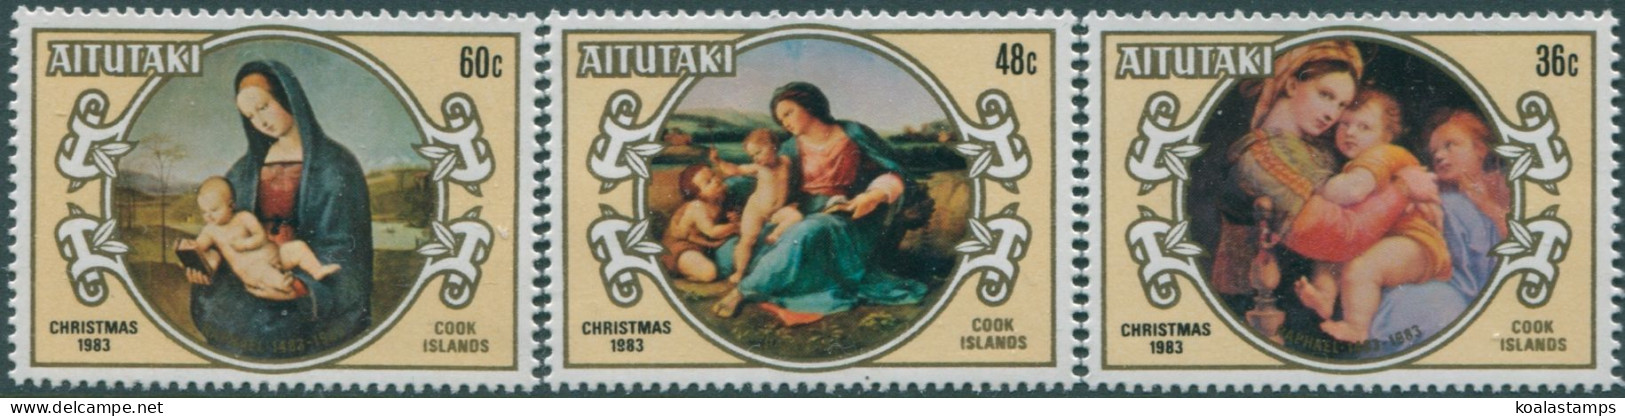 Aitutaki 1983 SG470-472 Christmas Set MNH - Cook